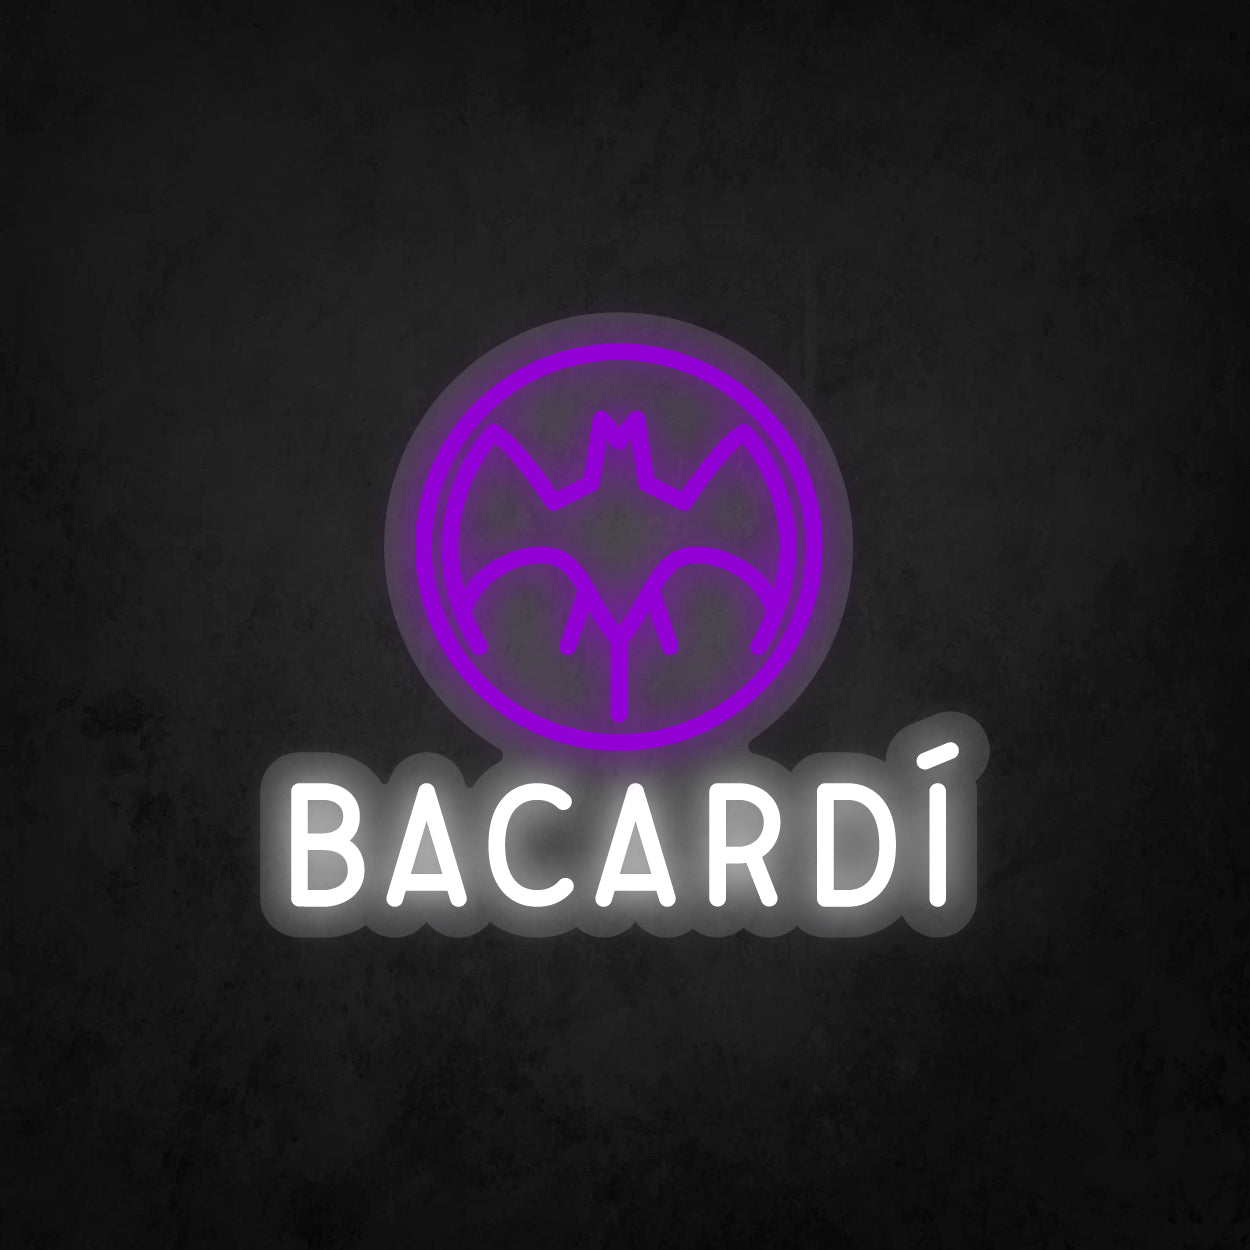 LED Neon Sign - Bacardi